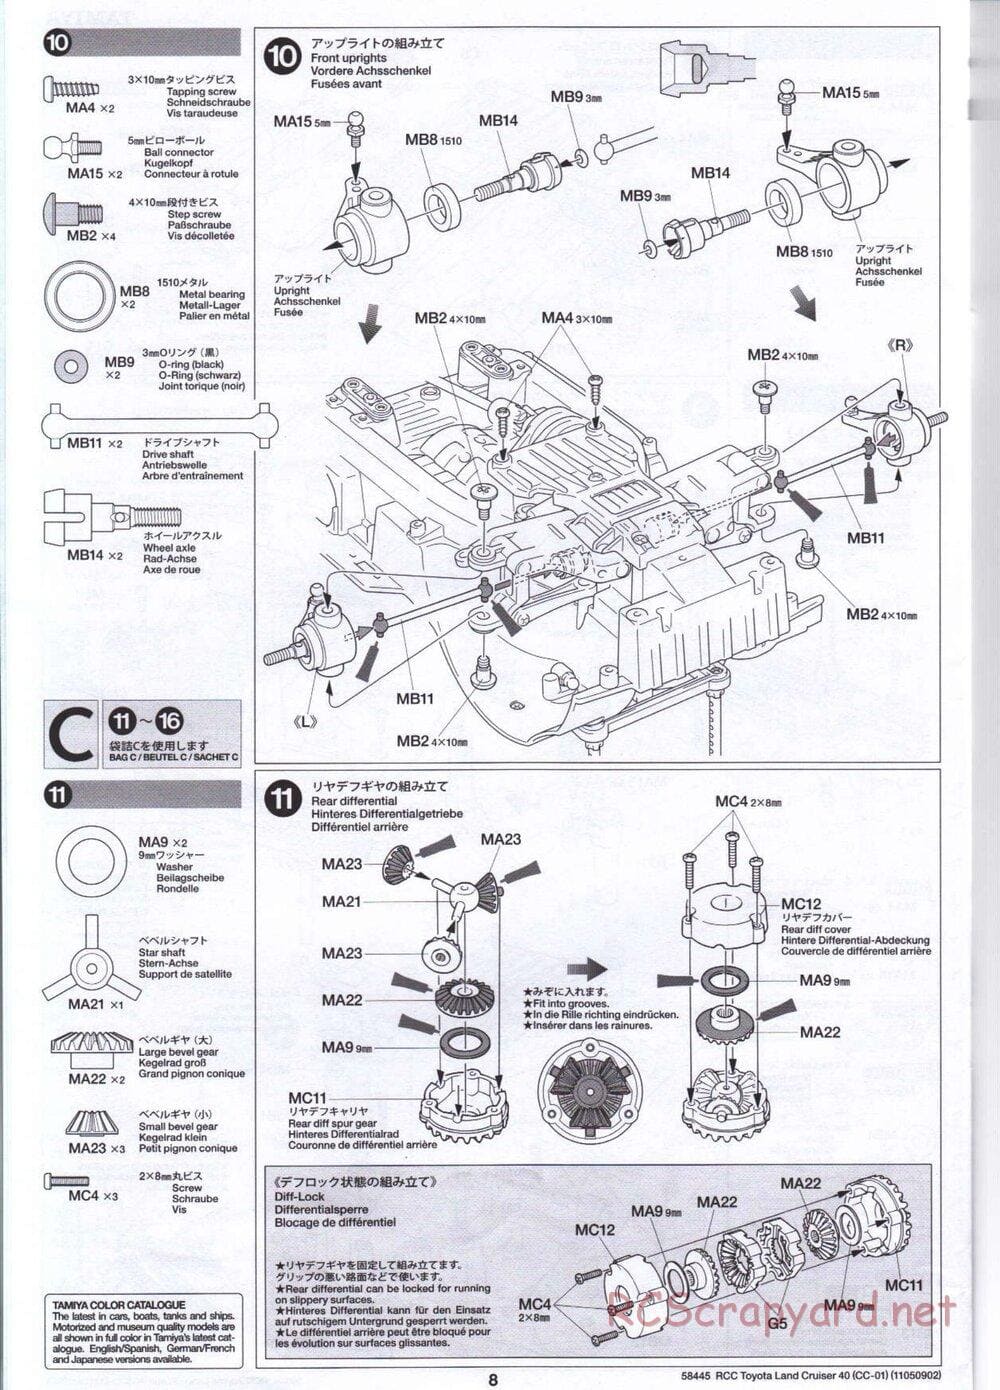 Tamiya - Toyota Land Cruiser 40 - CC-01 Chassis - Manual - Page 8